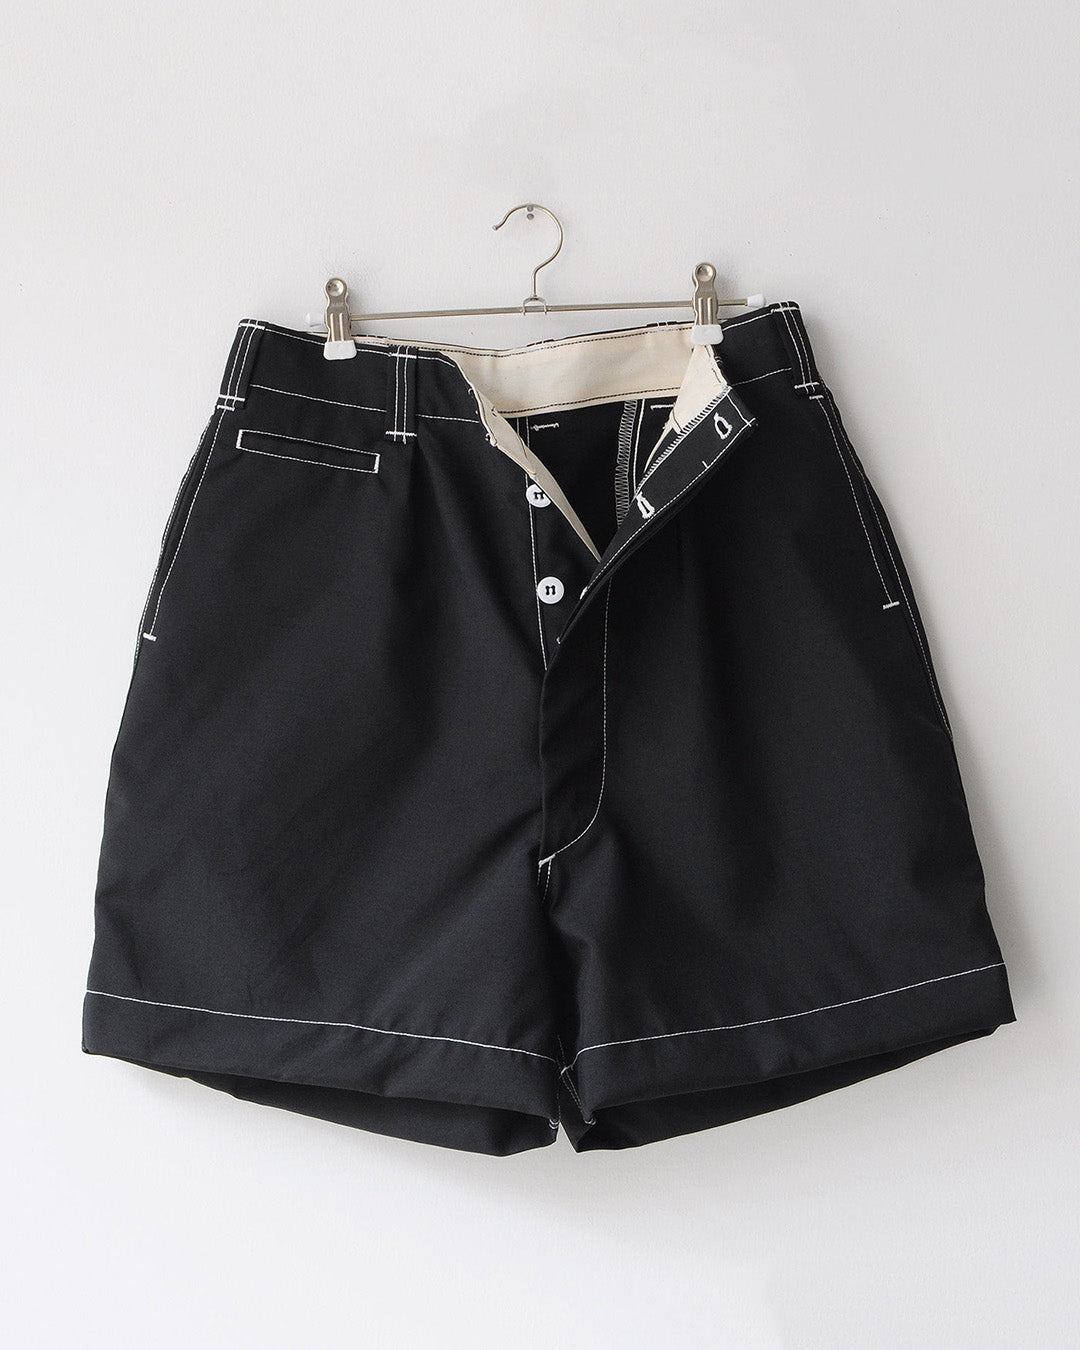 TUKI field shorts / black / polyester canvas /size0